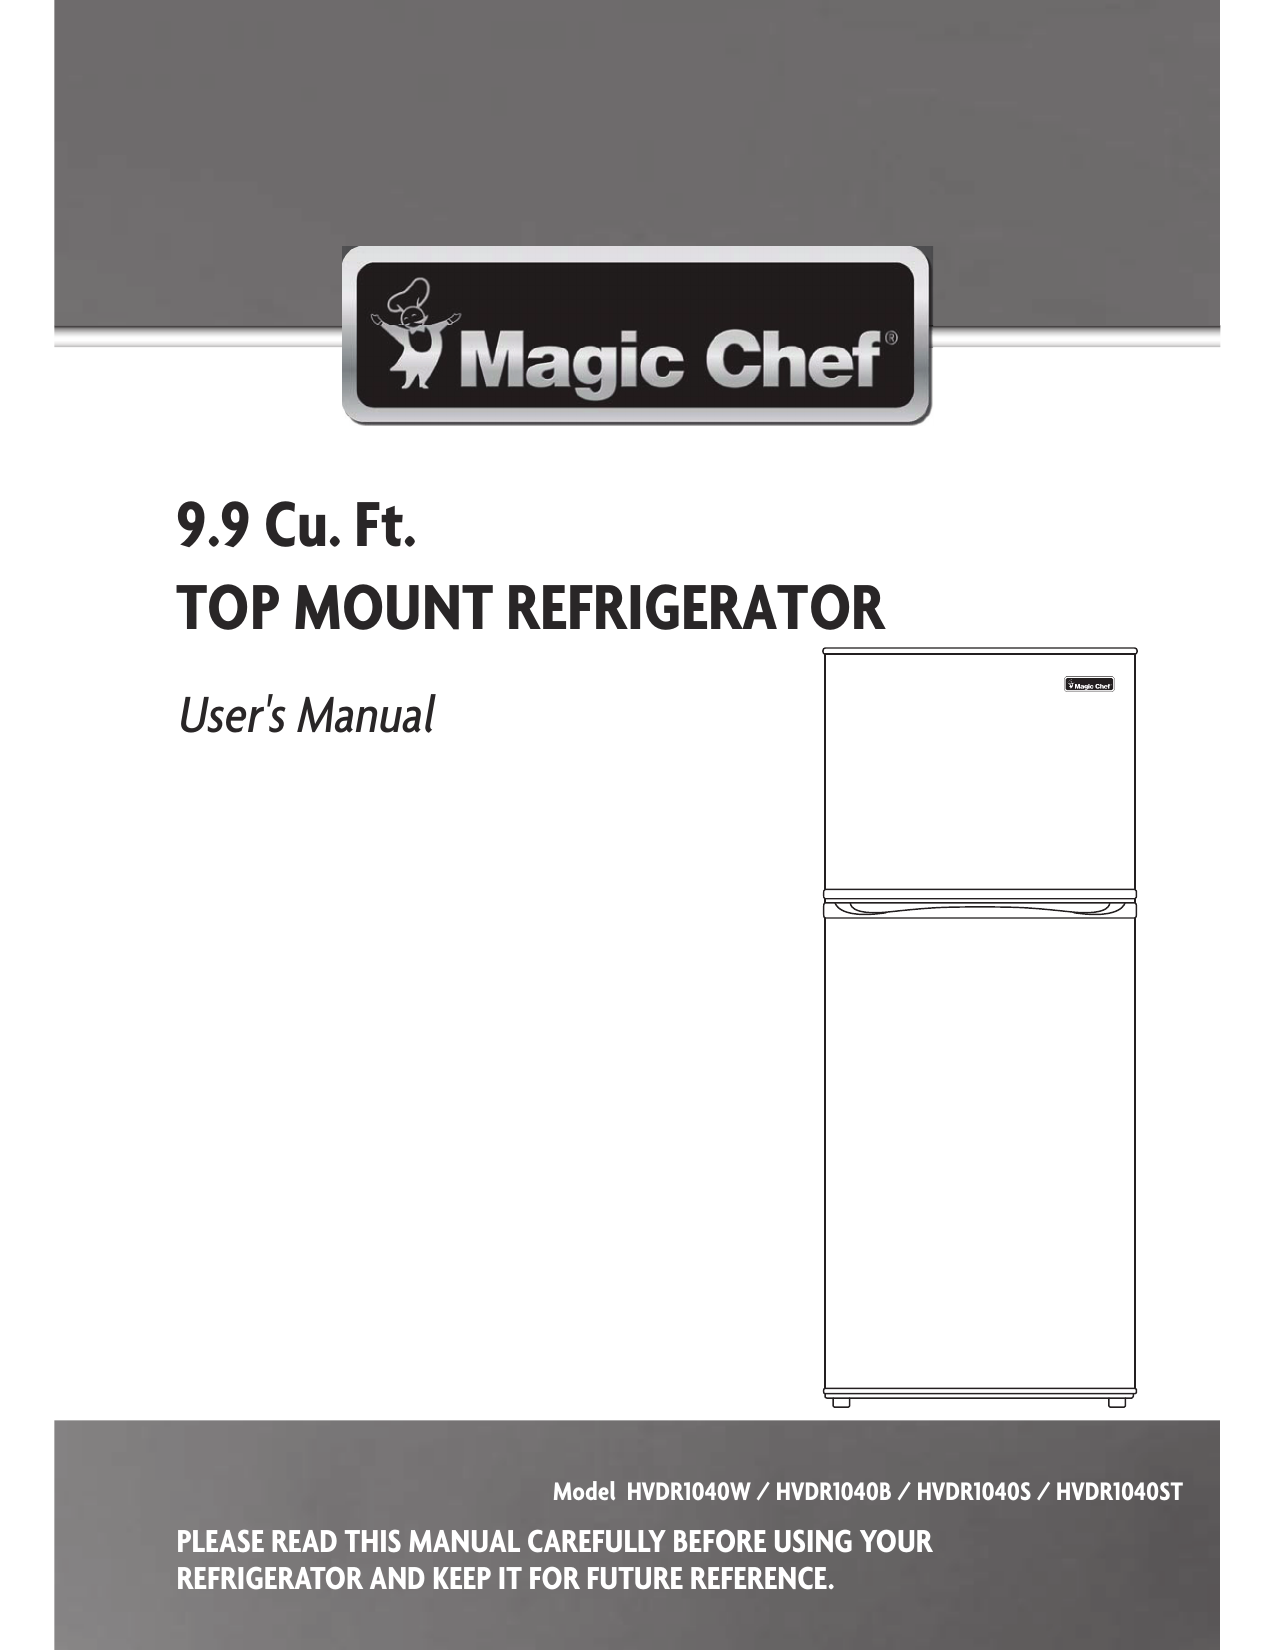 magic Chef Troubleshoot